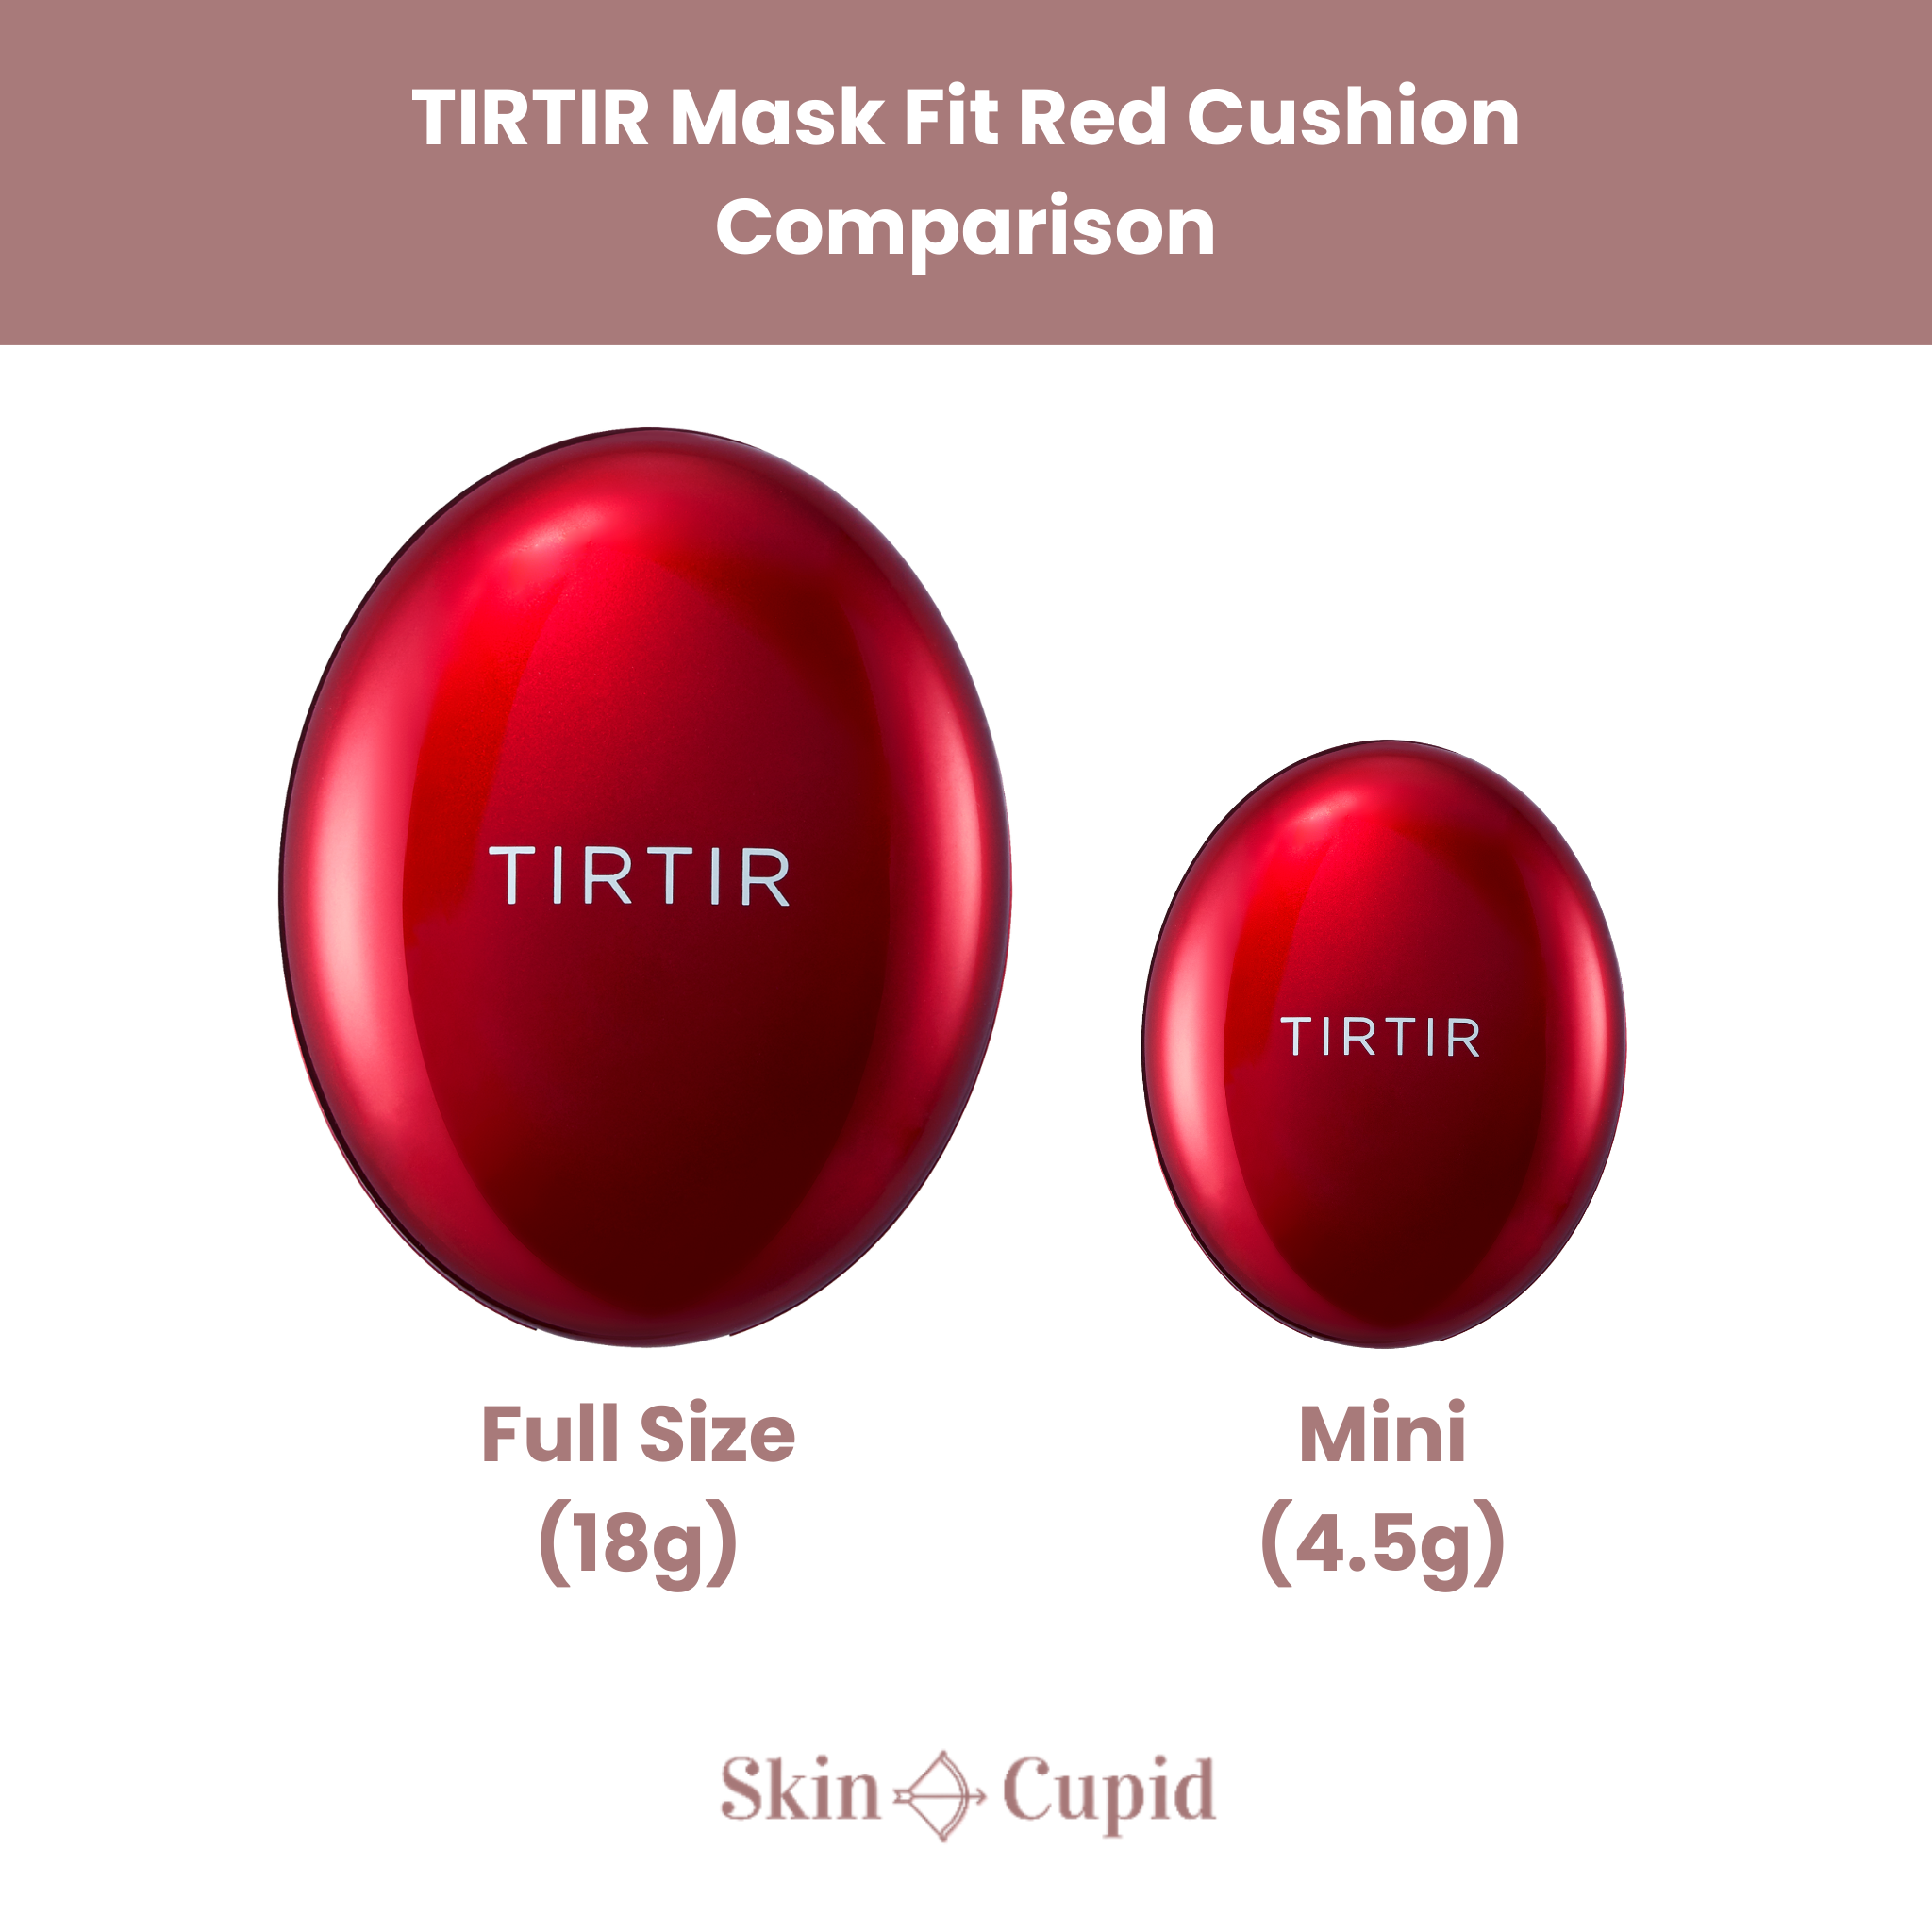 TIRTIR Mask Fit Red Cushion Comparison